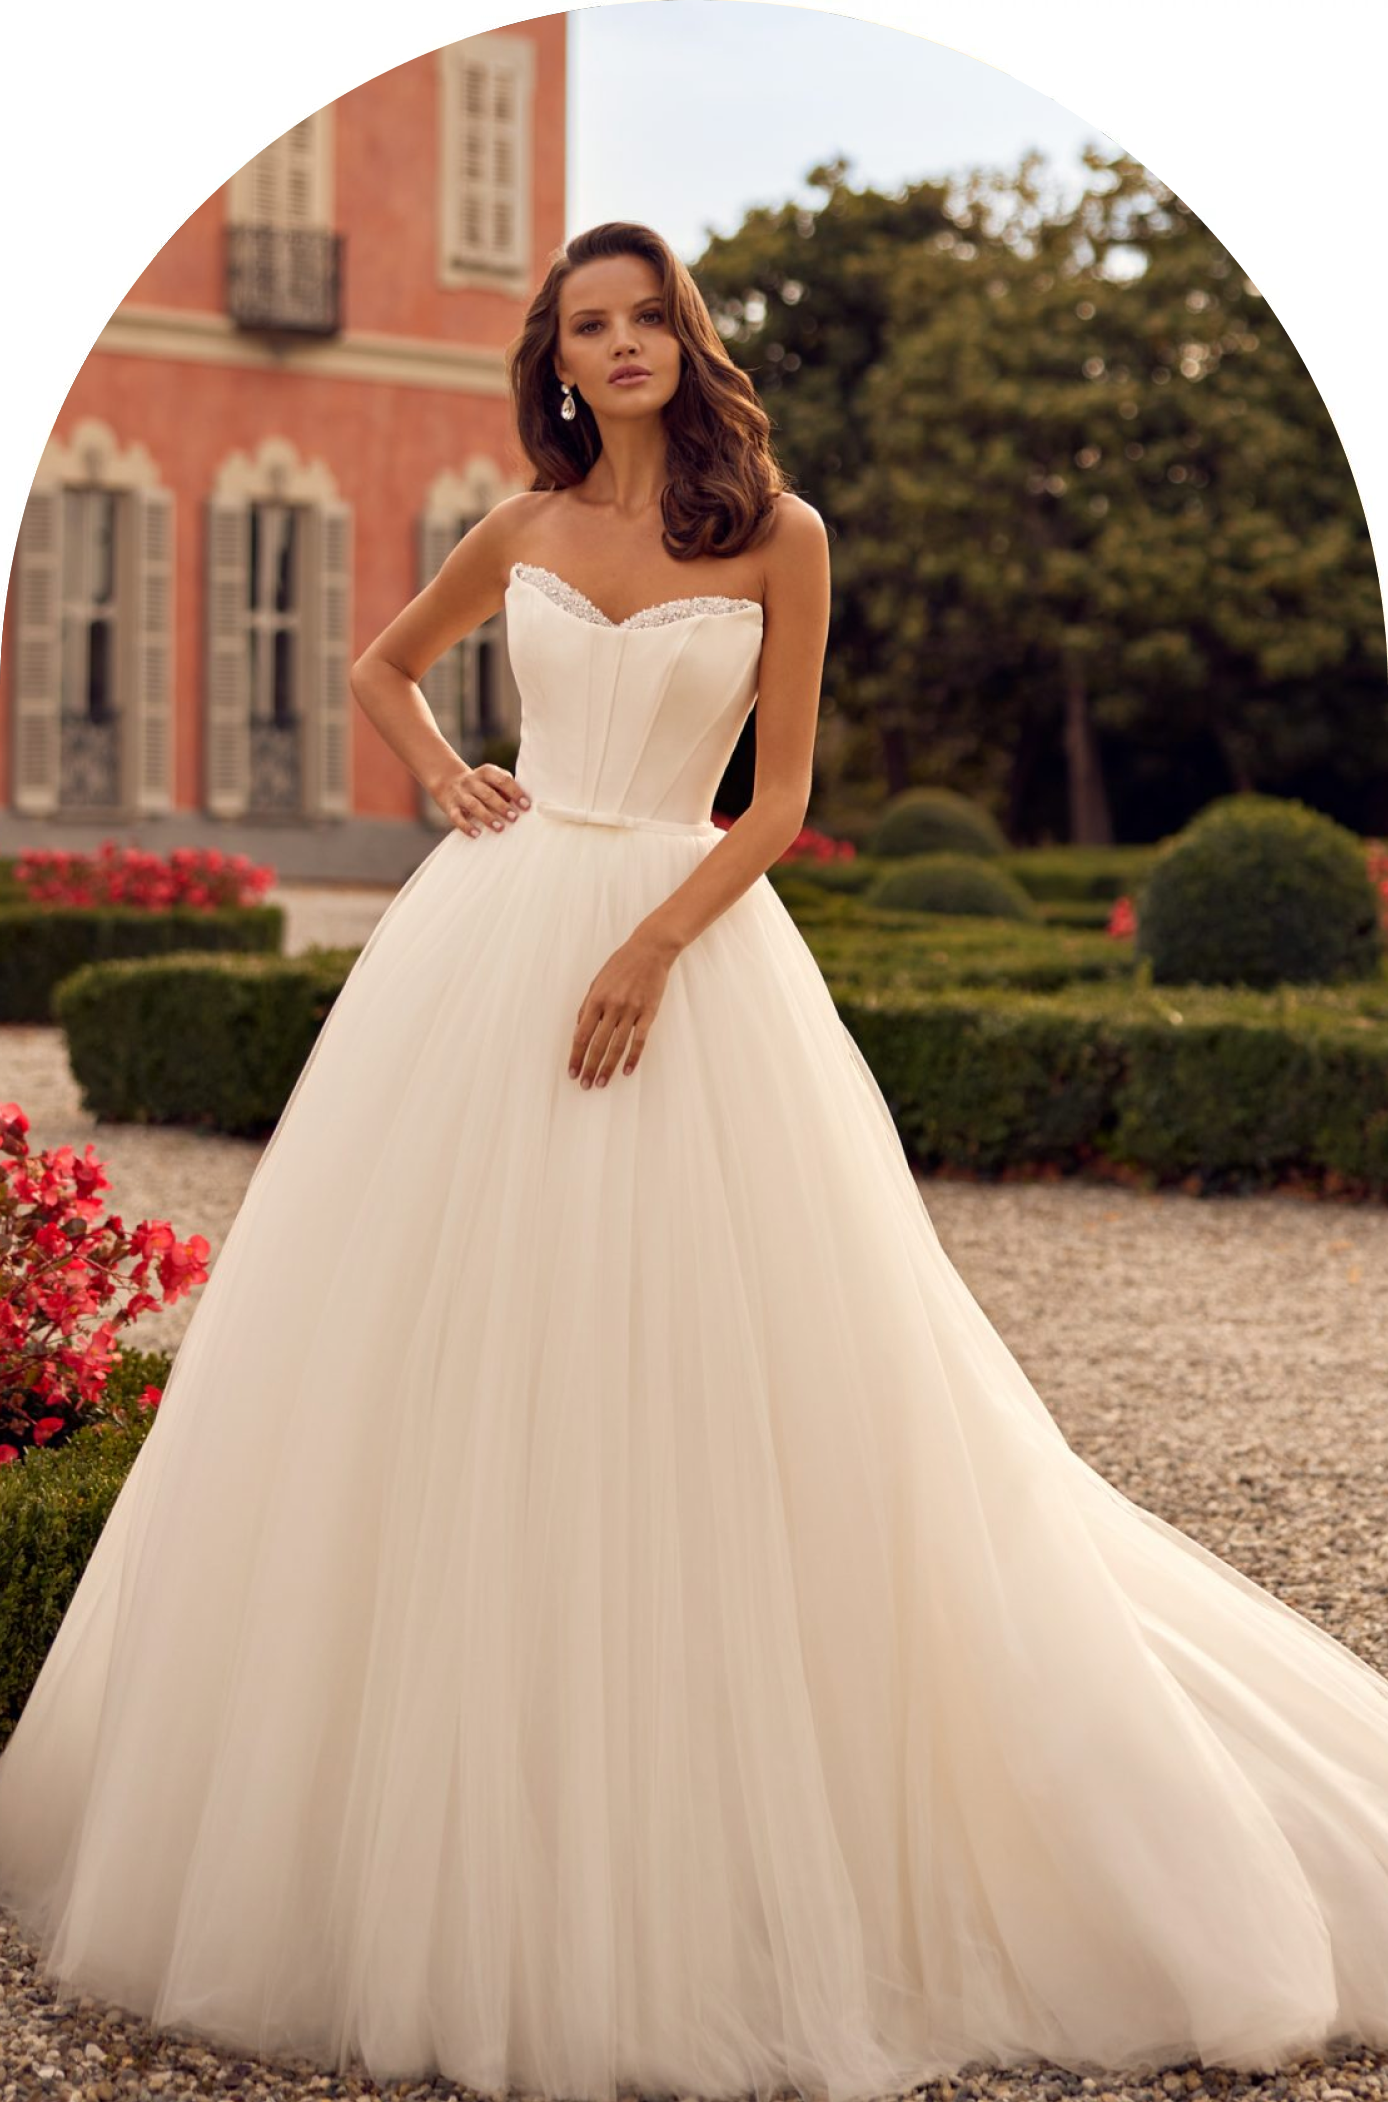 Model wearing a bridal dress